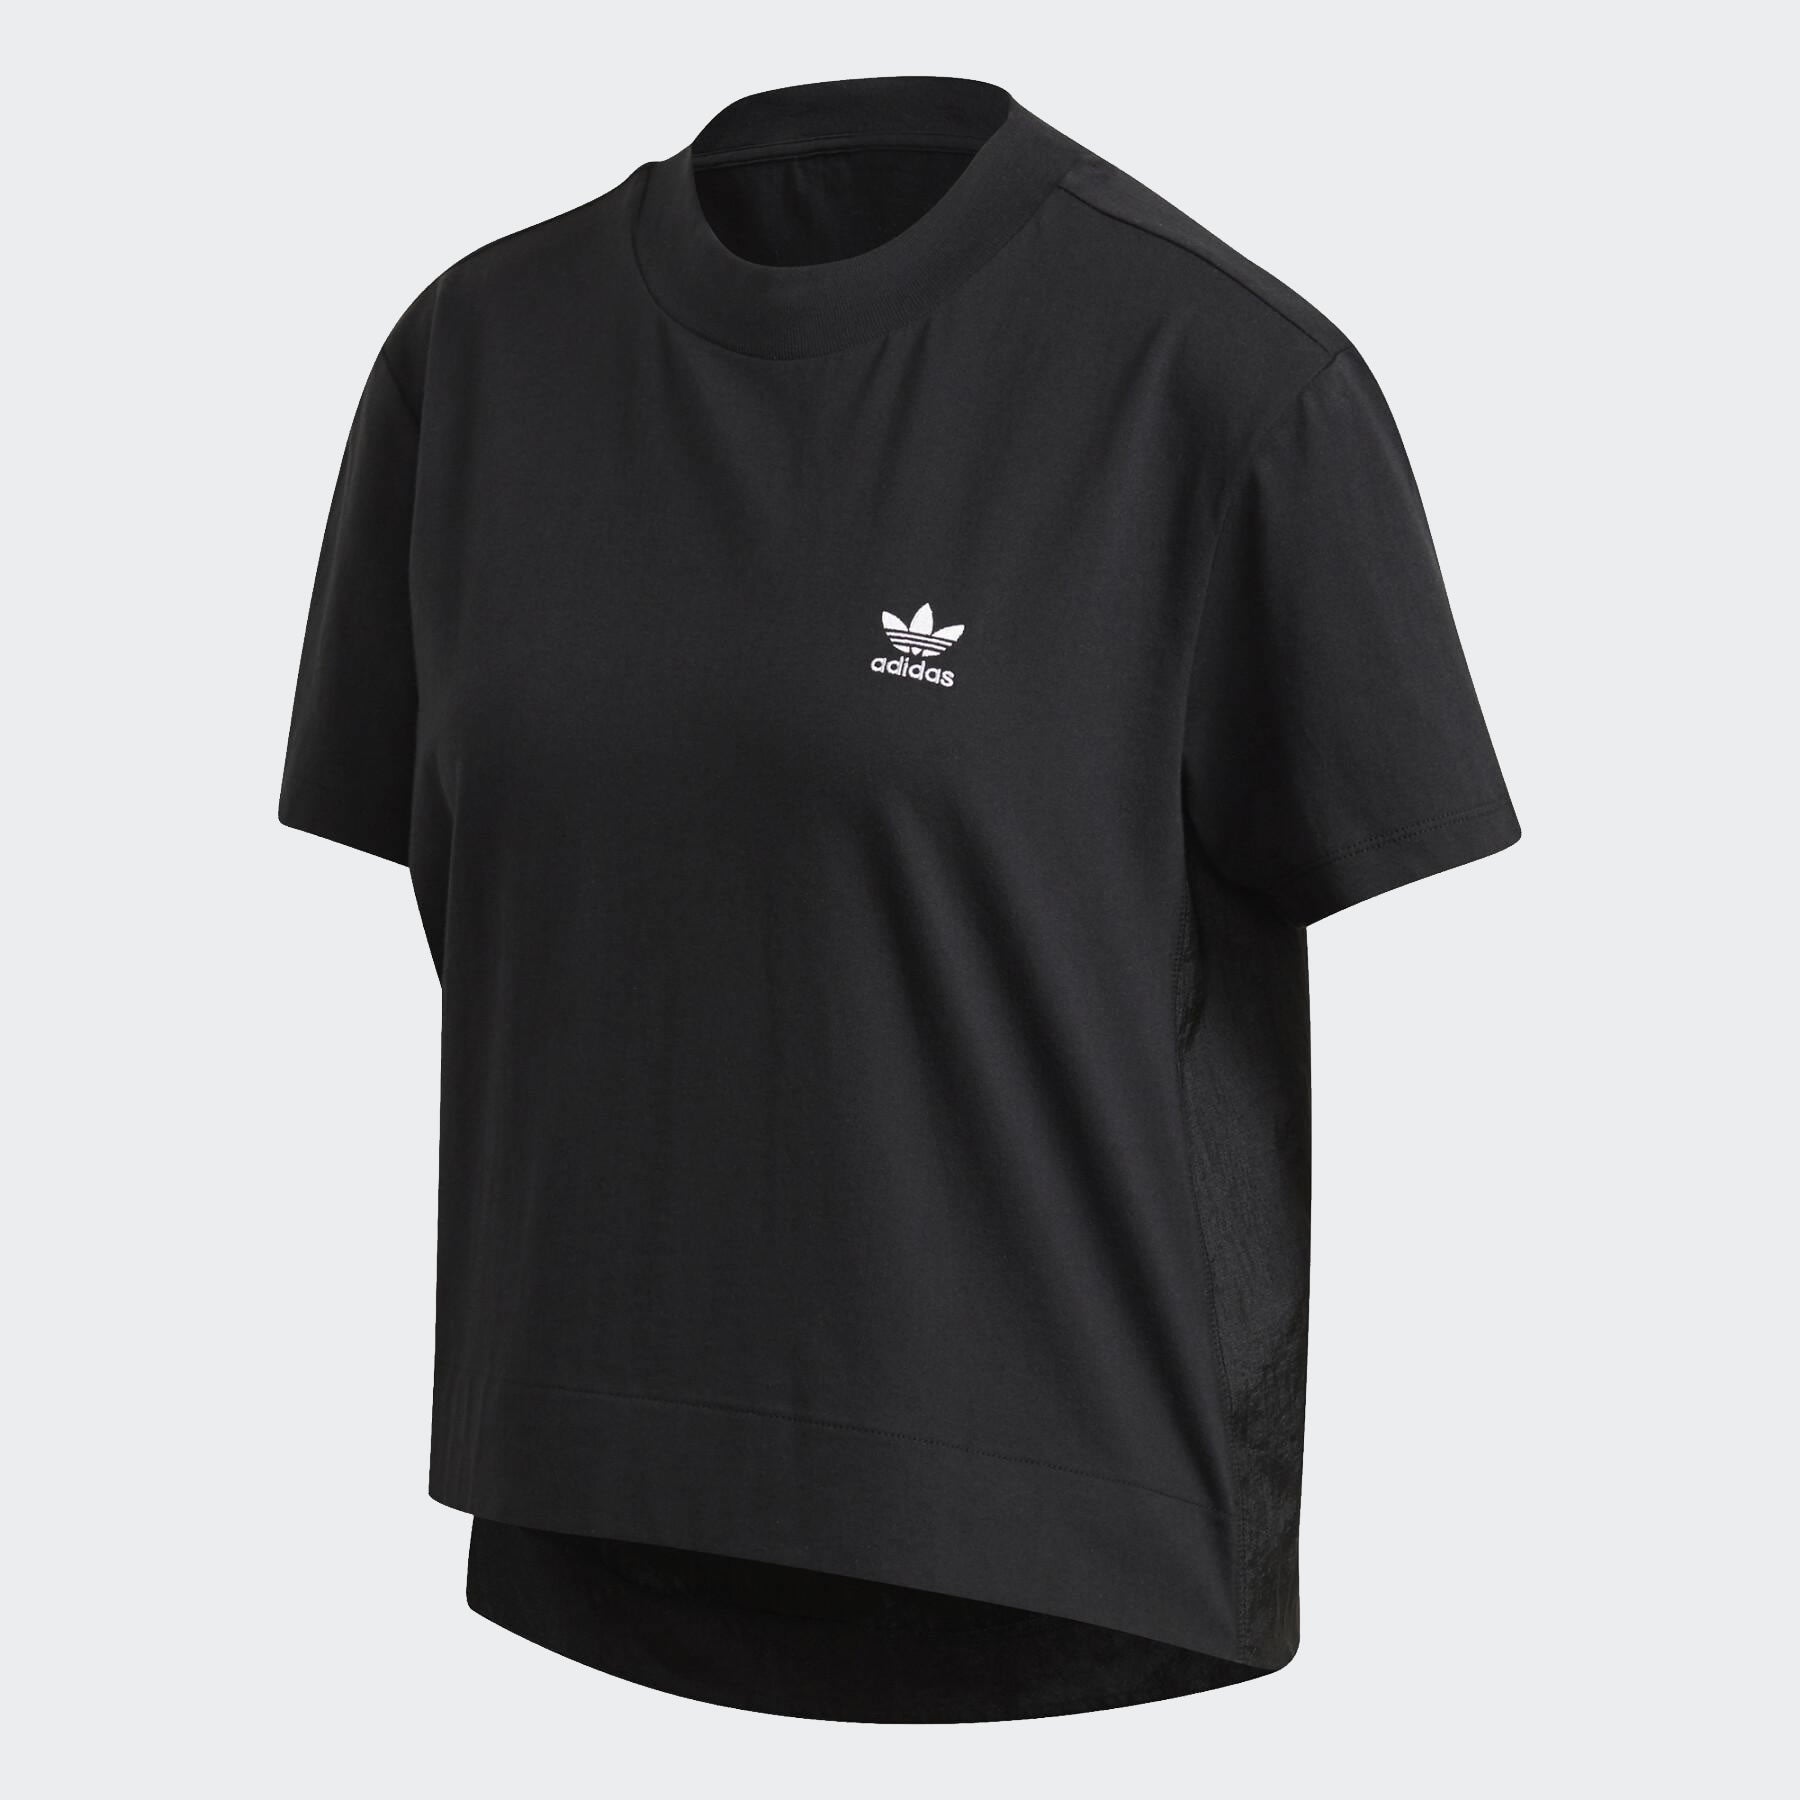 tradesports.co.uk Adidas Women's Trefoil Tee Shirt FL4116 UK 6